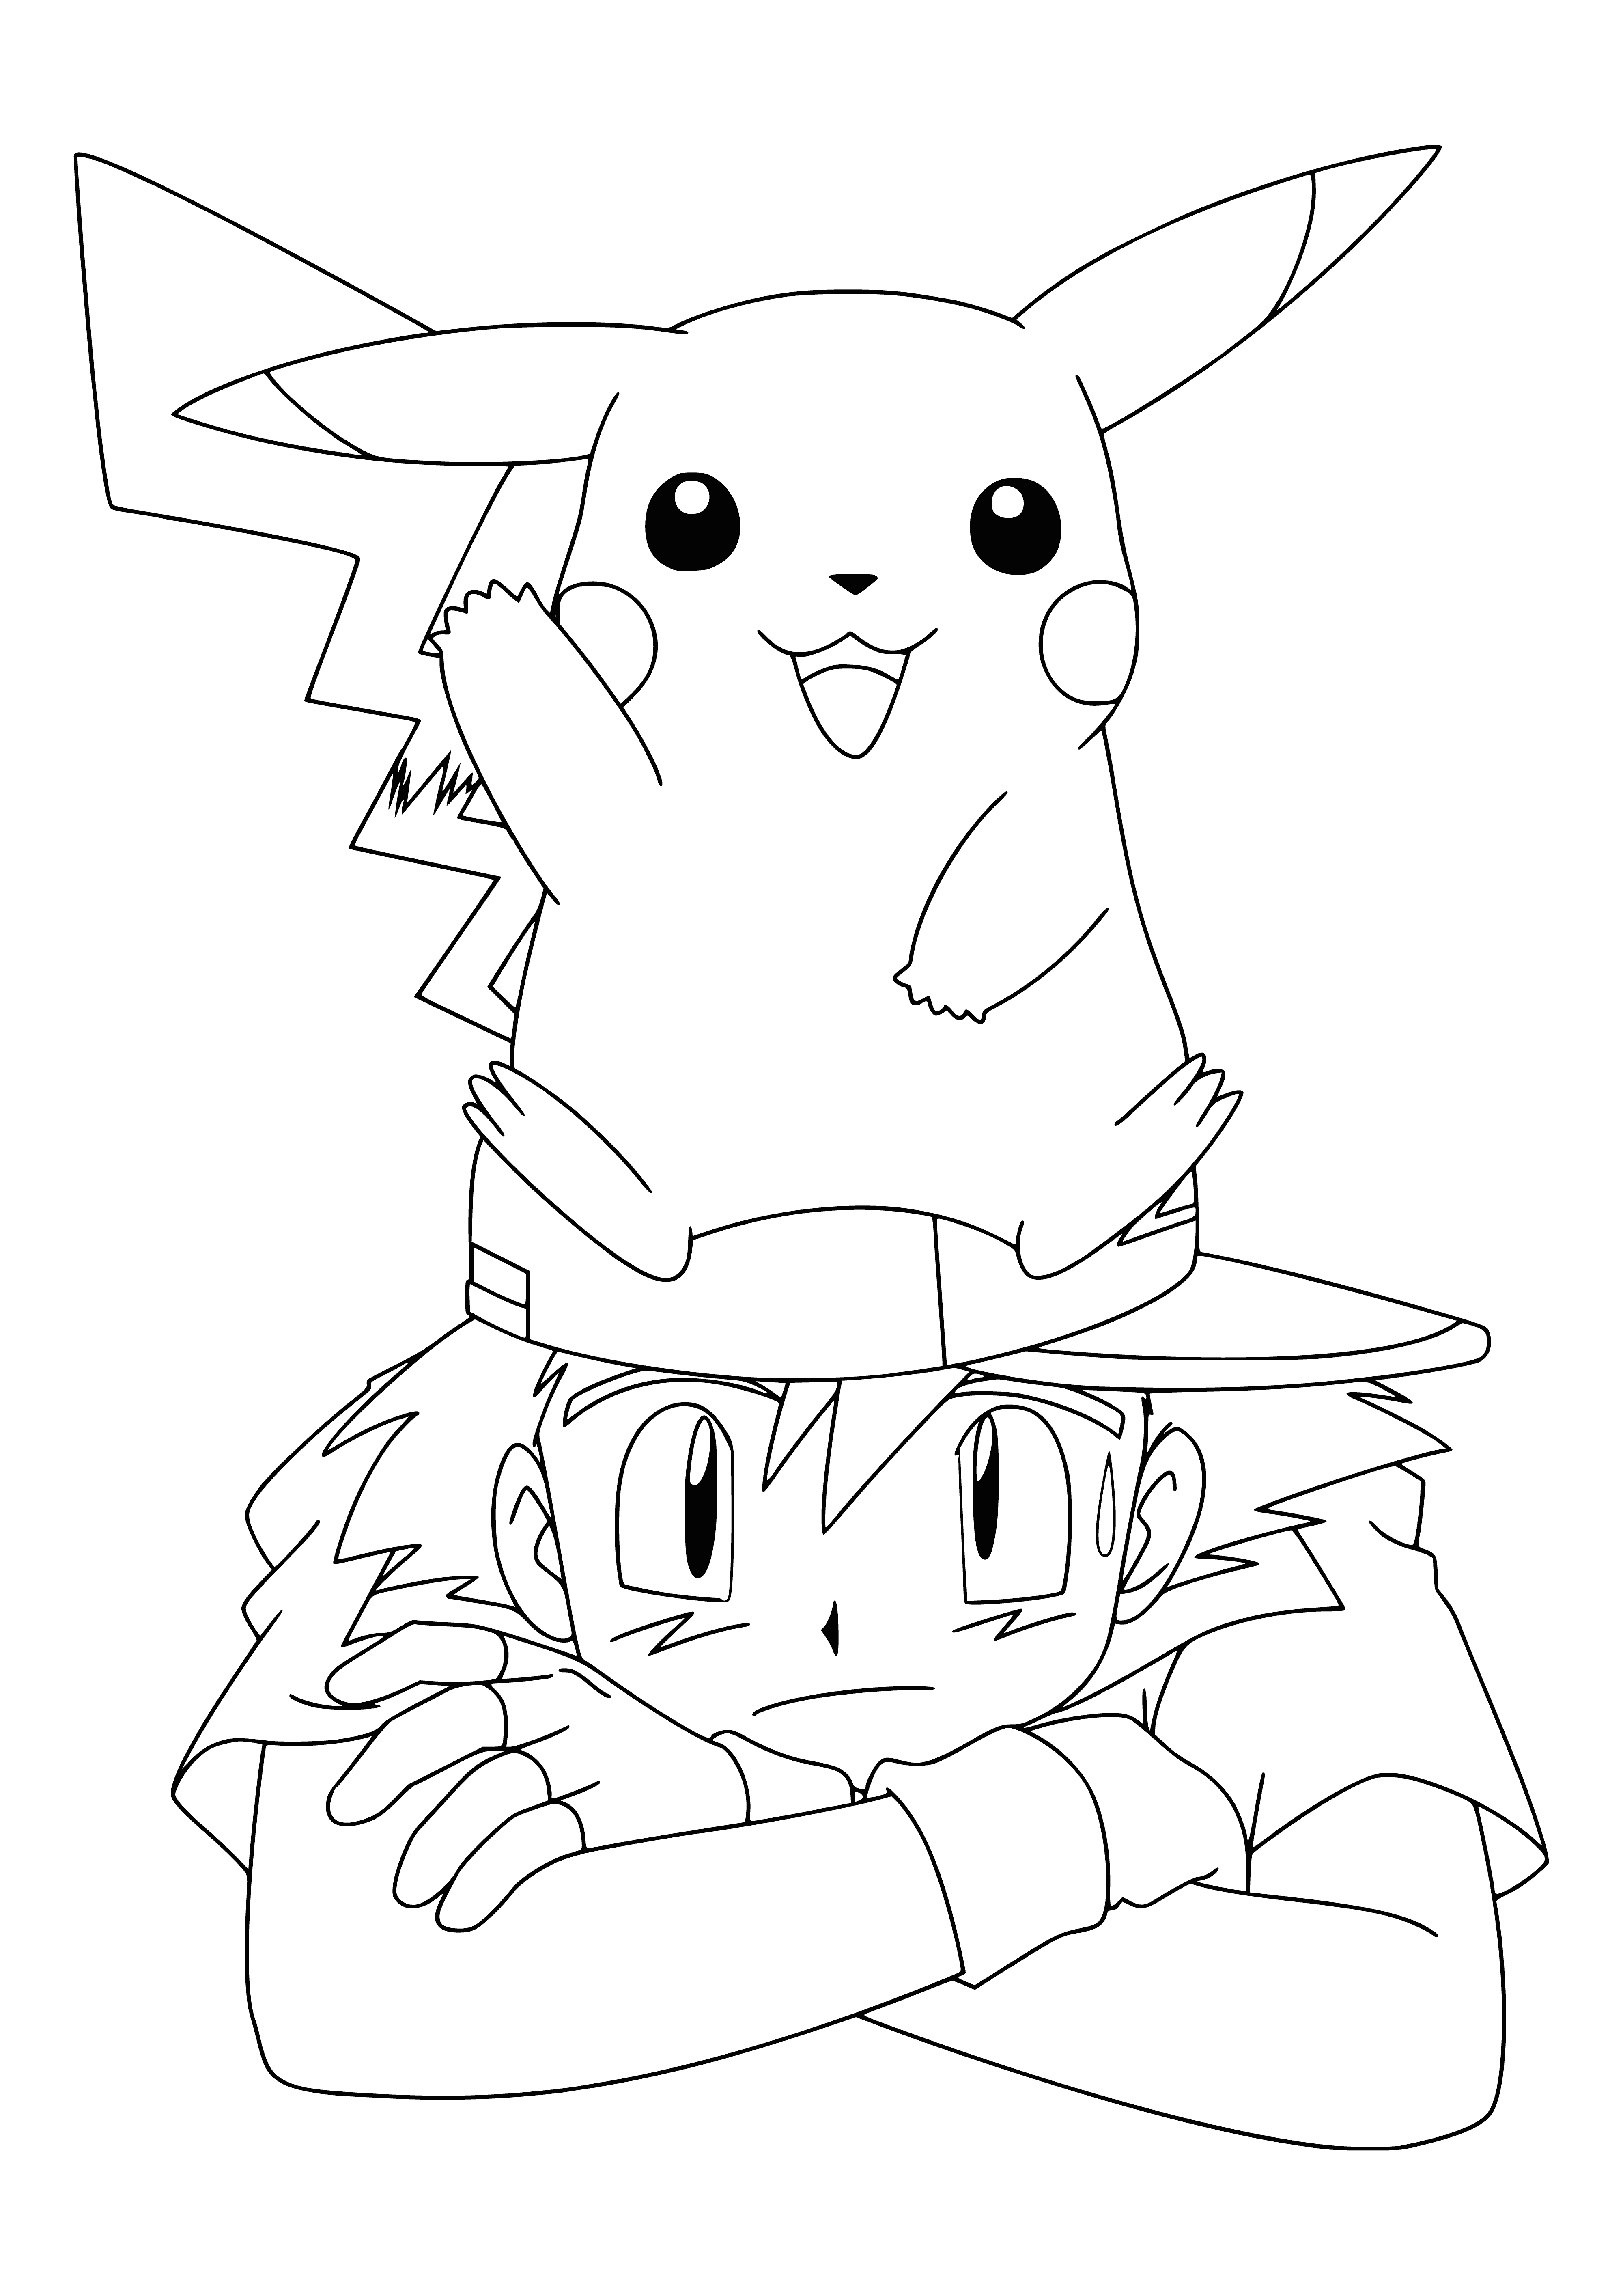 Pikachu and Ash Ketchum coloring page